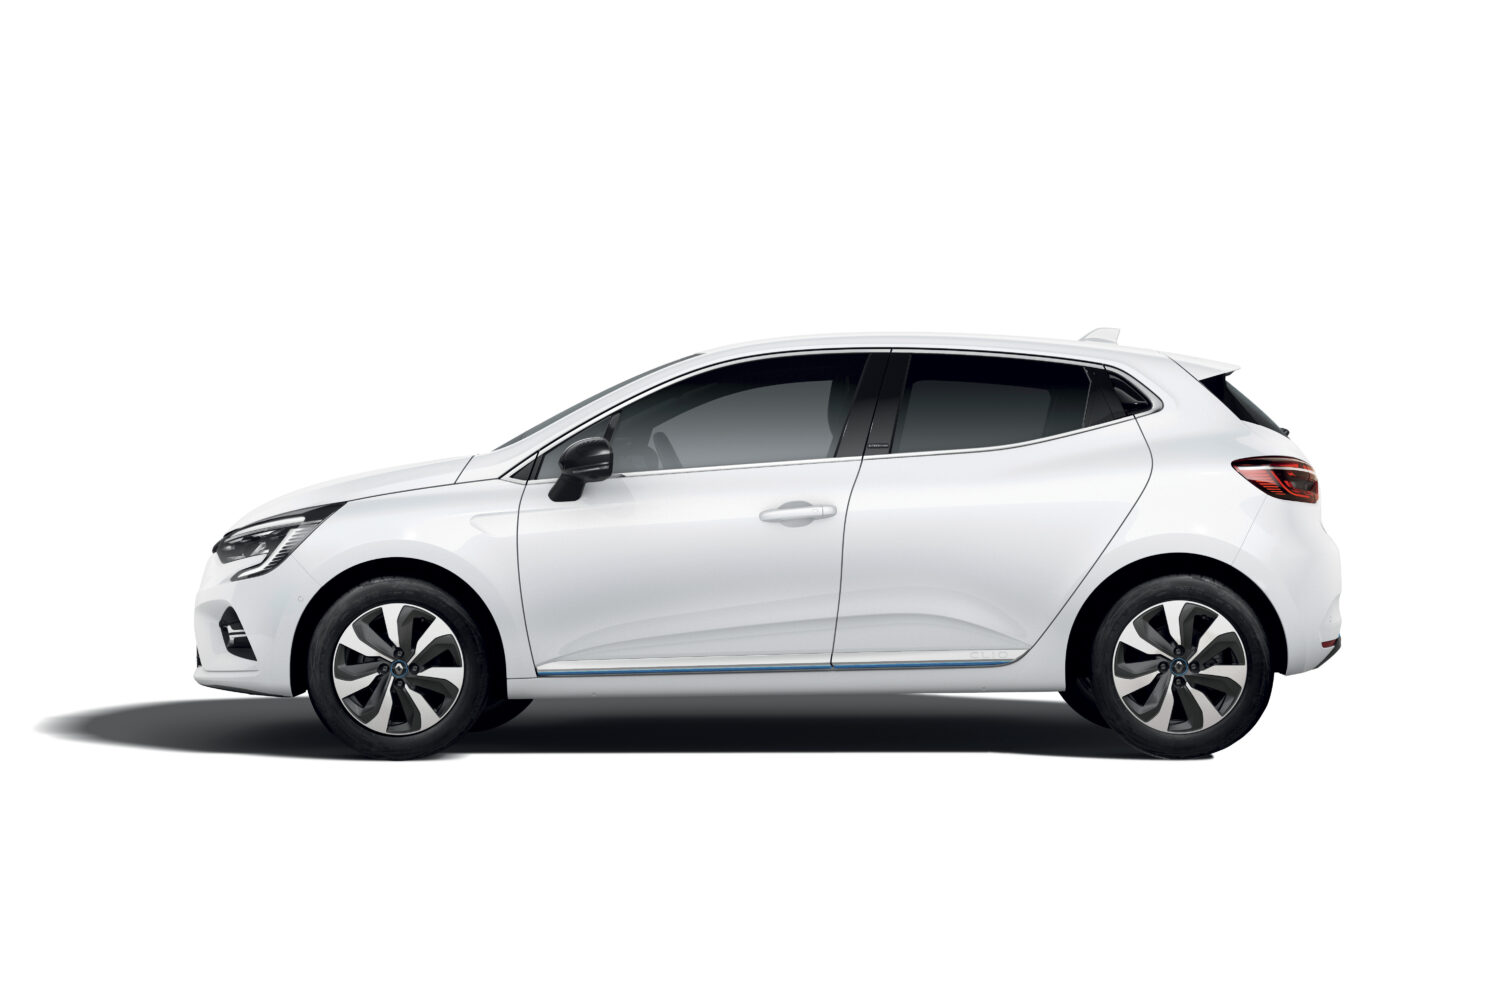 2020 - Nouvelle Renault CLIO E-TECH